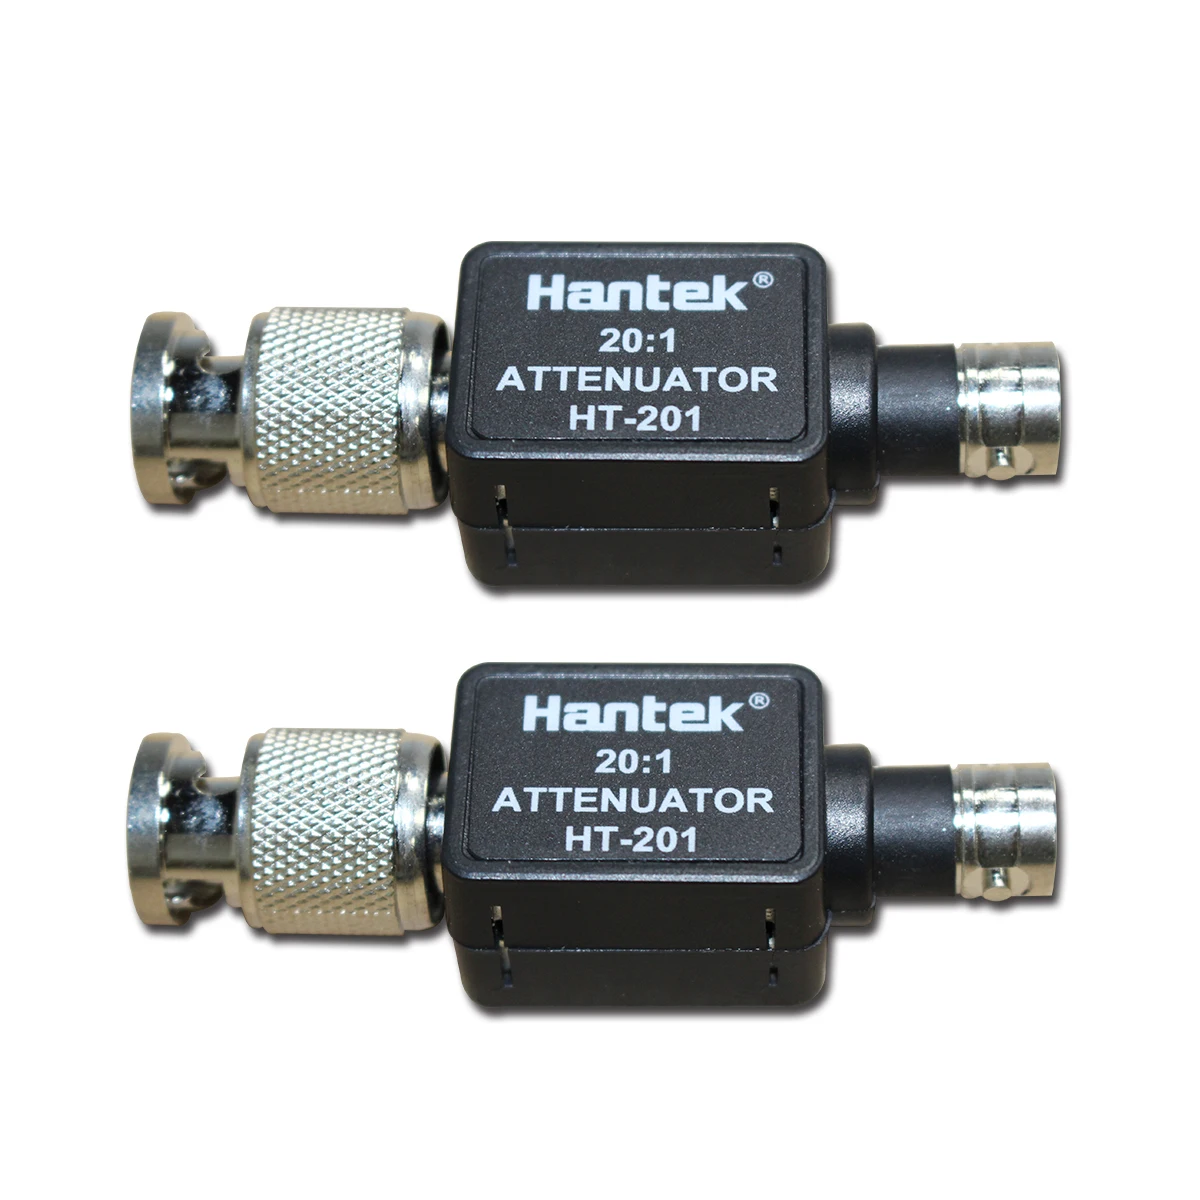 2pcs/lot Hantek Attenuator 1008C Oscilloscope Signal passive Attenuator HT201 20:1 Passive Attenuator 300V Max For Pico